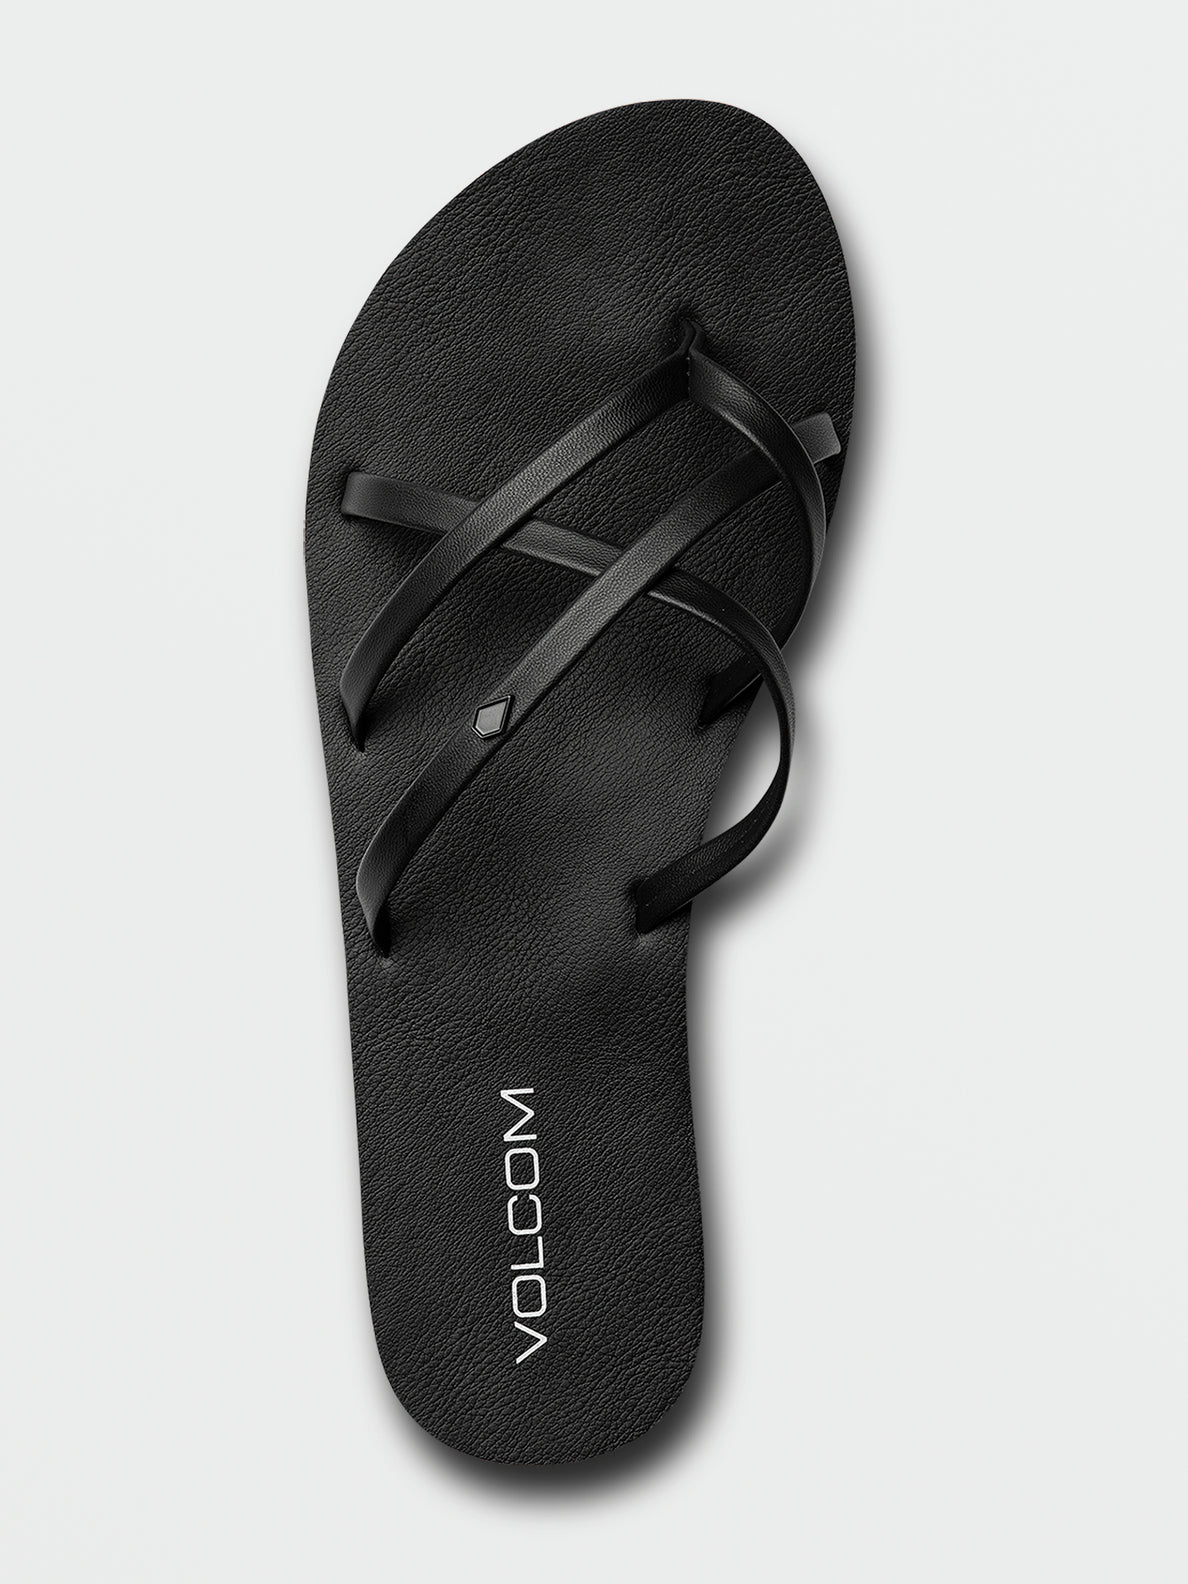 New School II Sandals - Black Out (W0812351_BKO) [1]